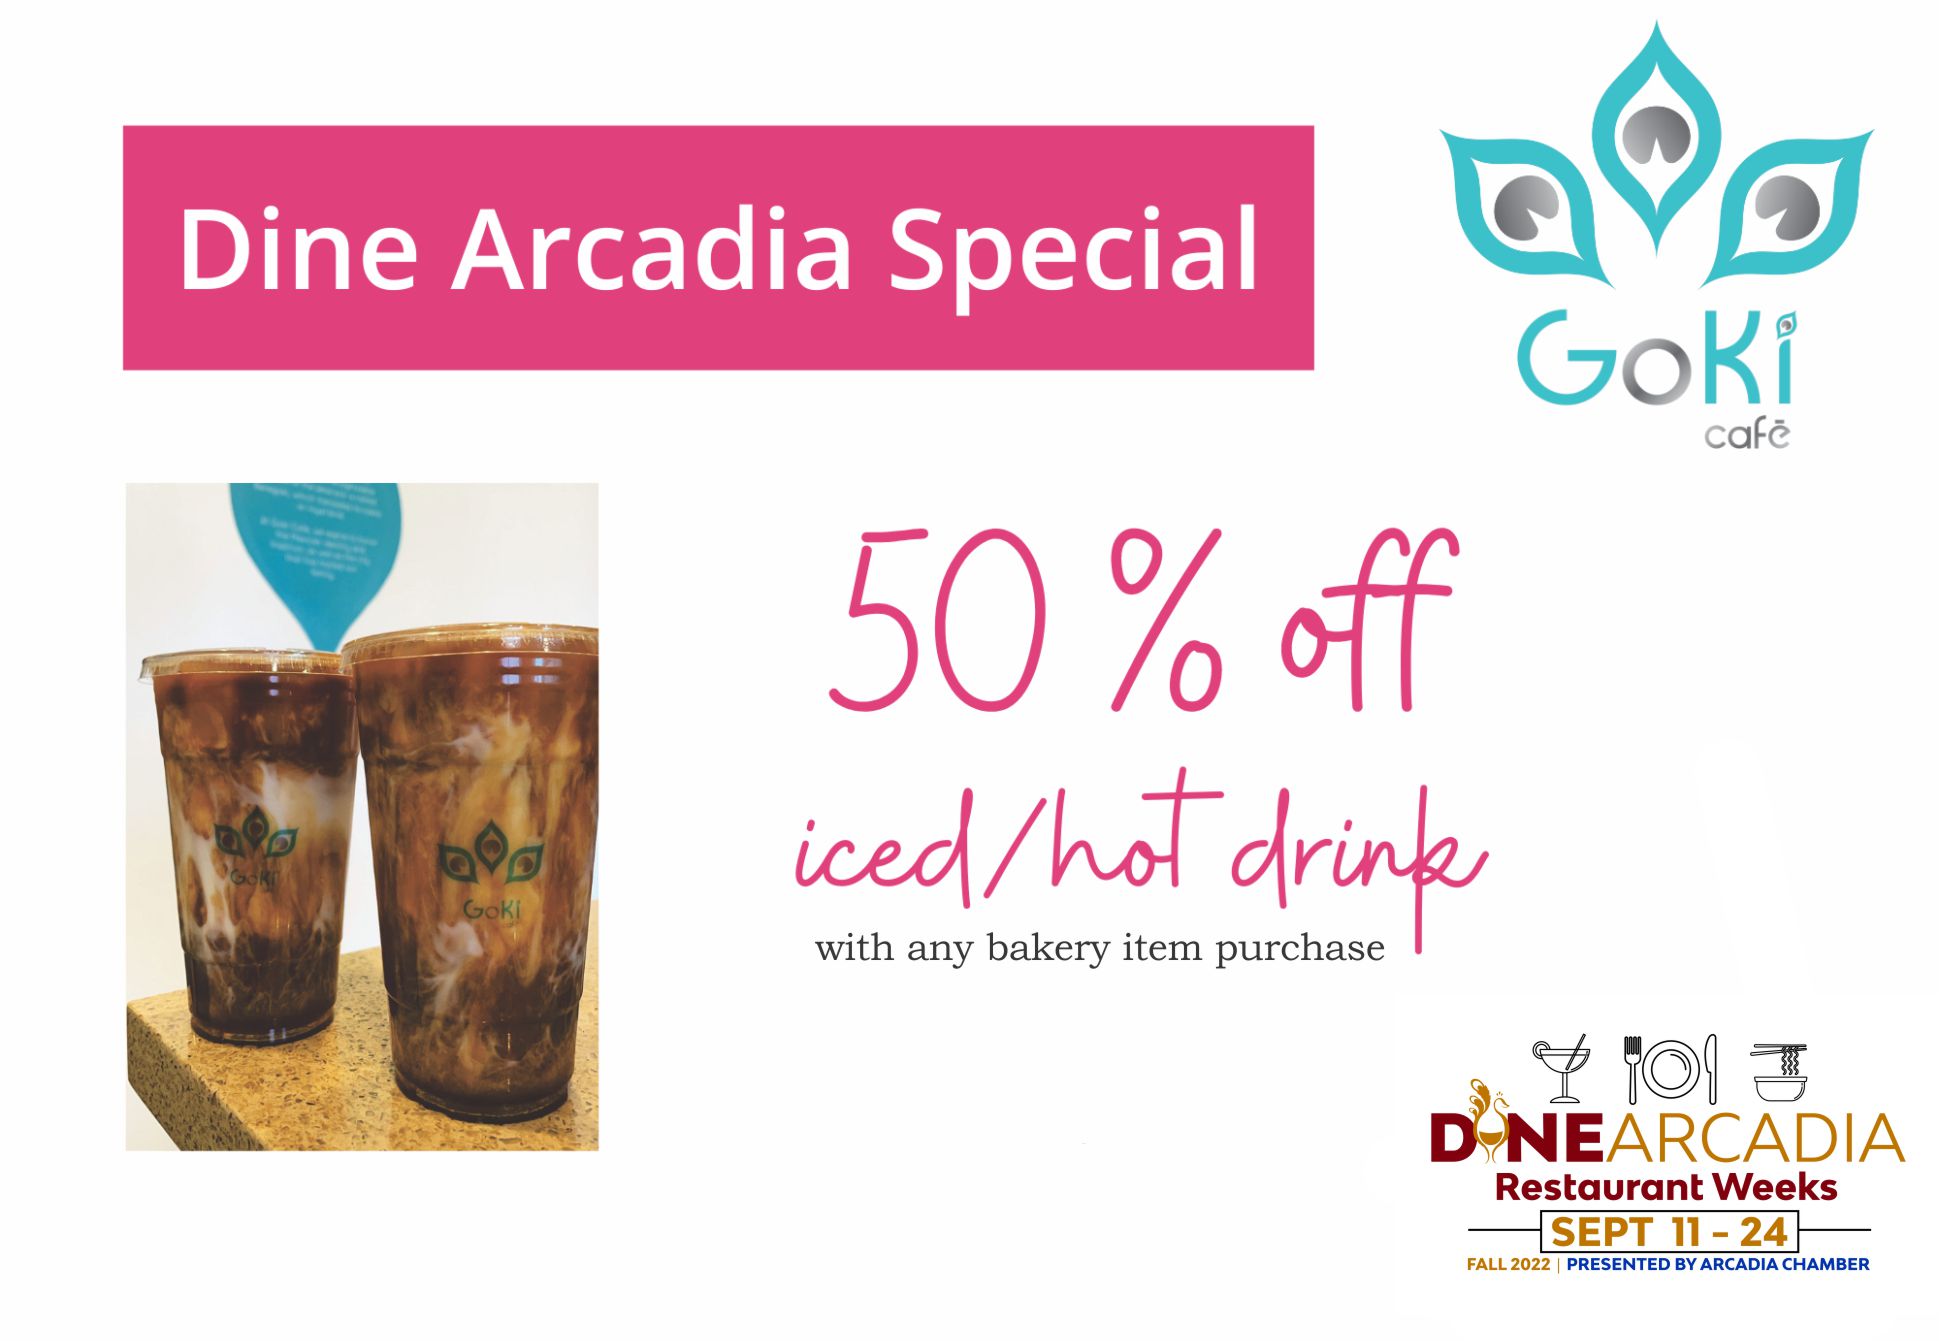 Goki Cafe Dine Arcadia promo for September showing Goki logo and two latte drinks